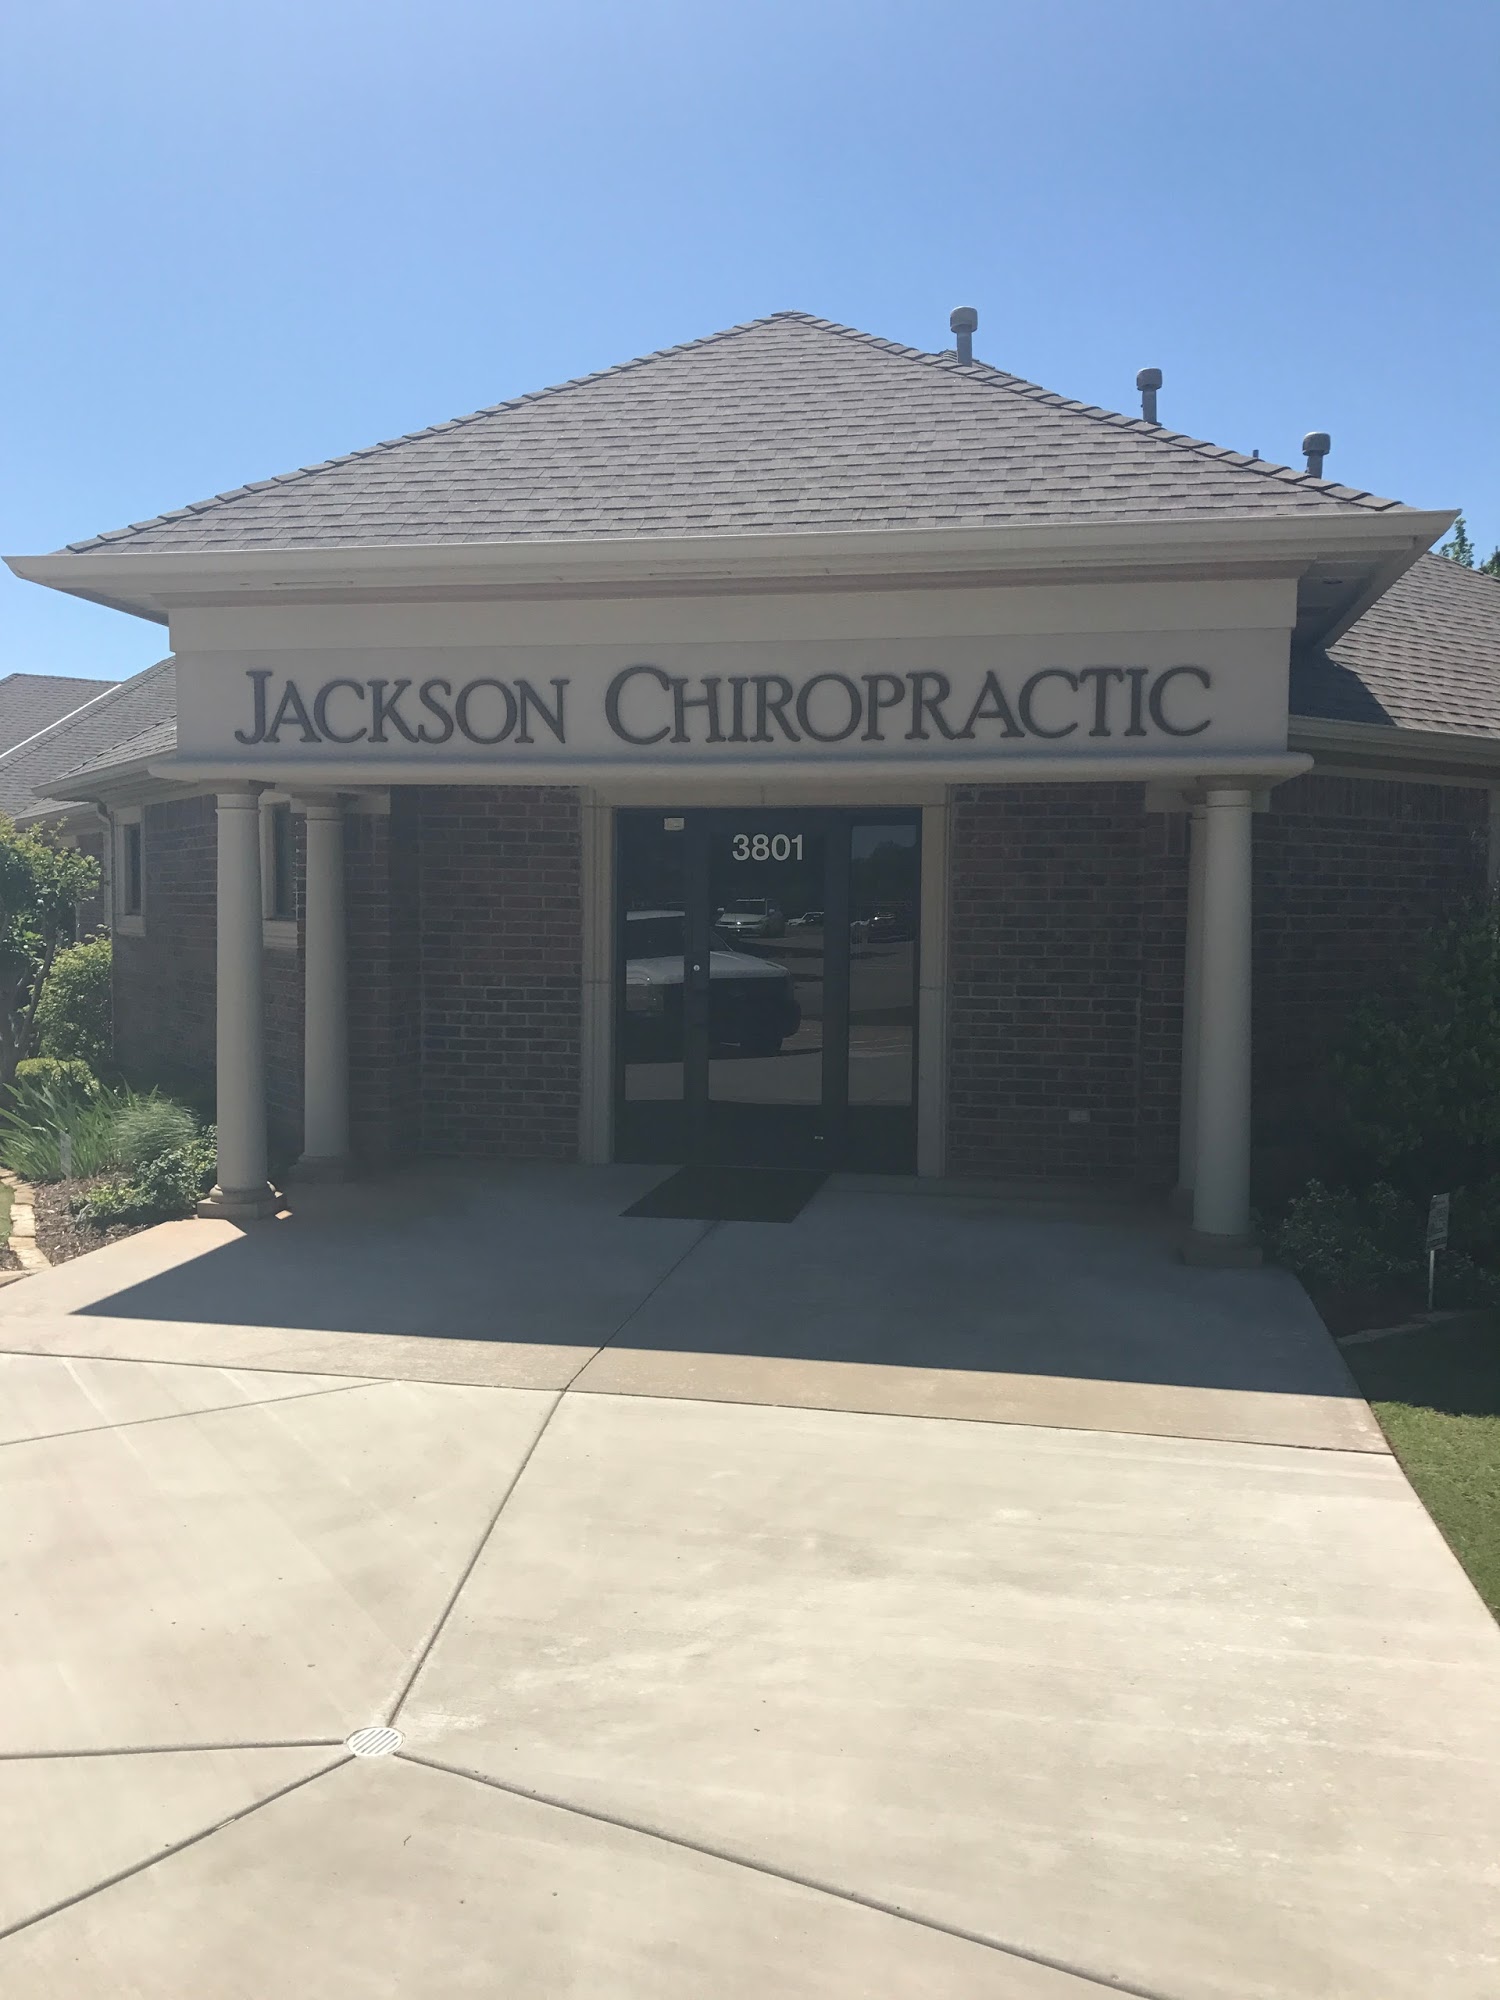 Jackson Chiropractic Clinic